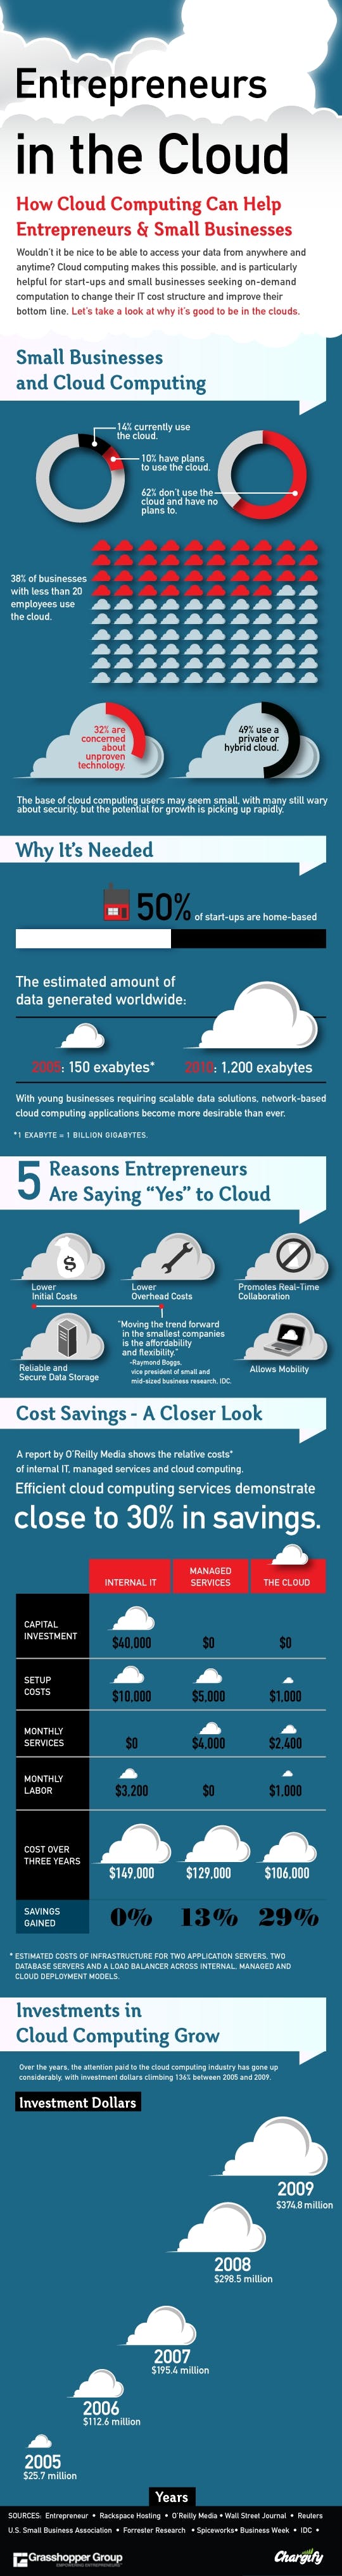 Entrepreneurs in the Cloud IG